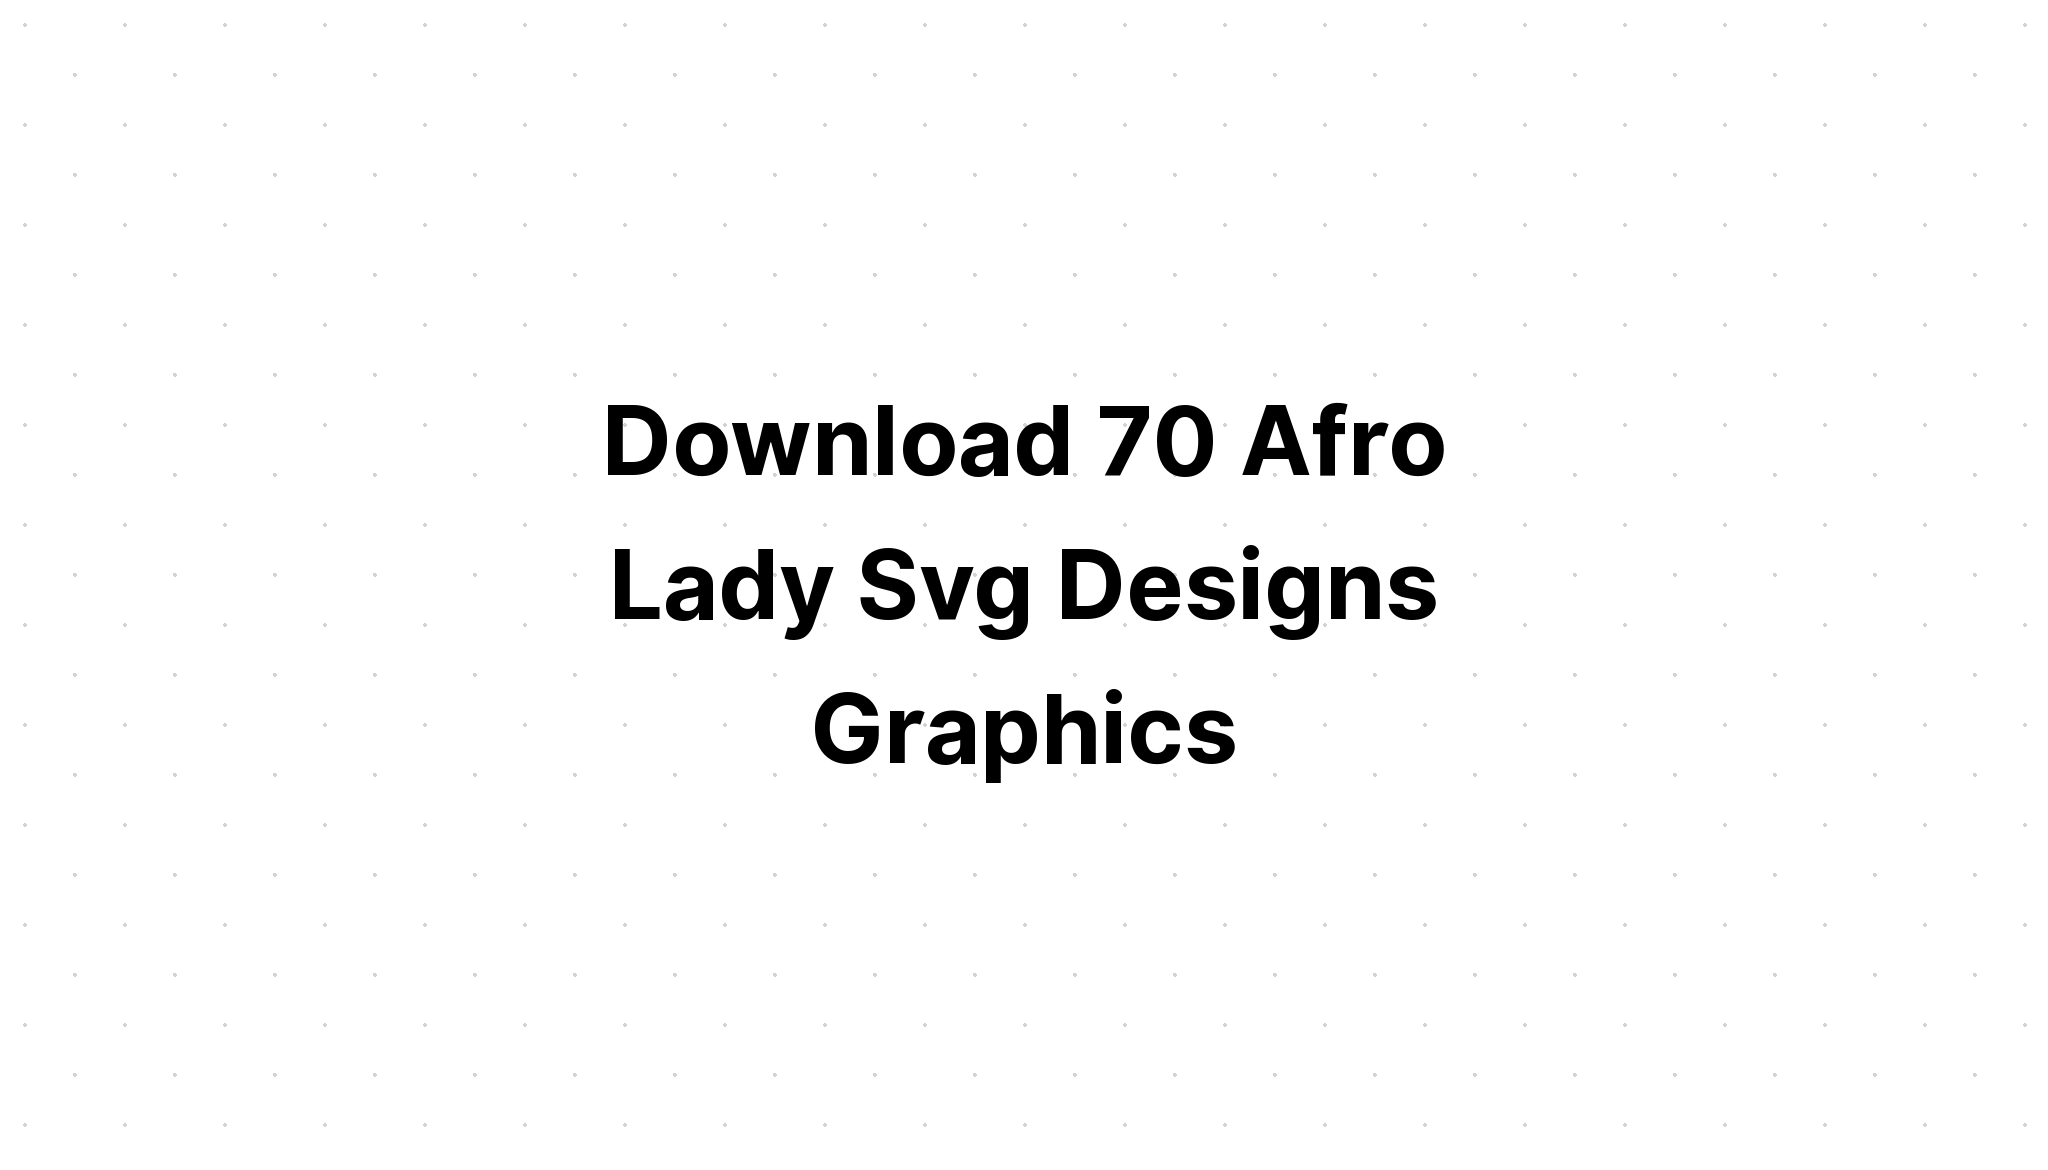 Download Amazing Messy Bun Hairstyle Bandana SVG File